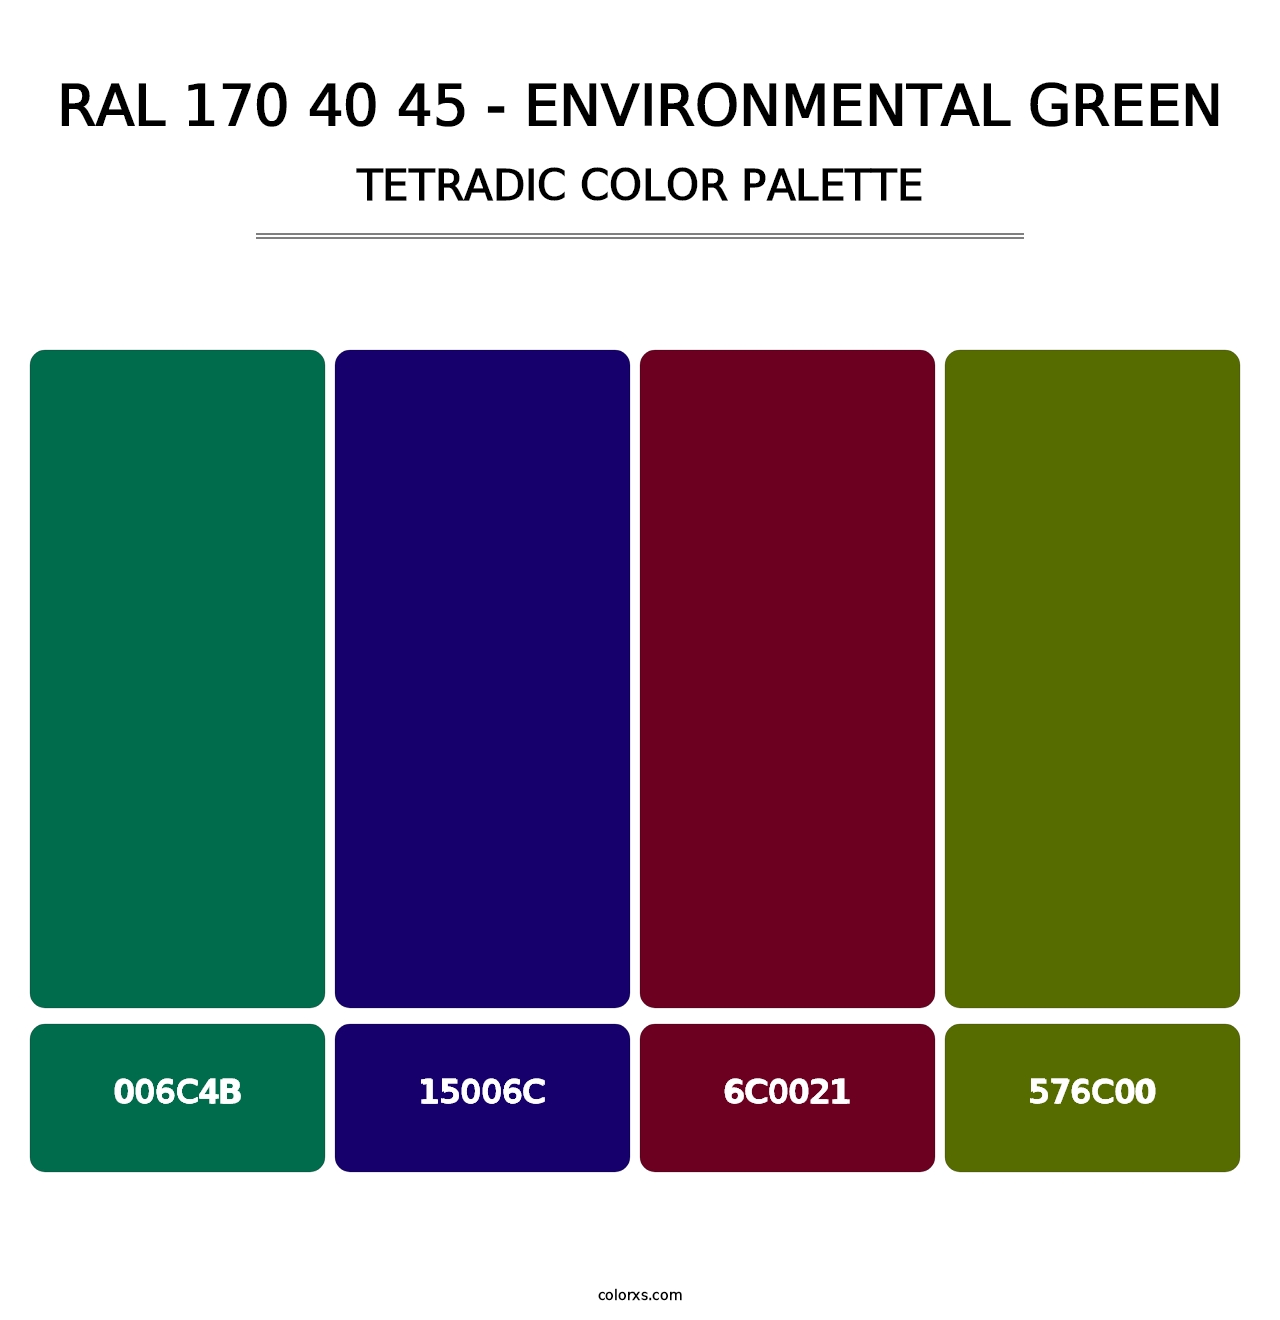 RAL 170 40 45 - Environmental Green - Tetradic Color Palette